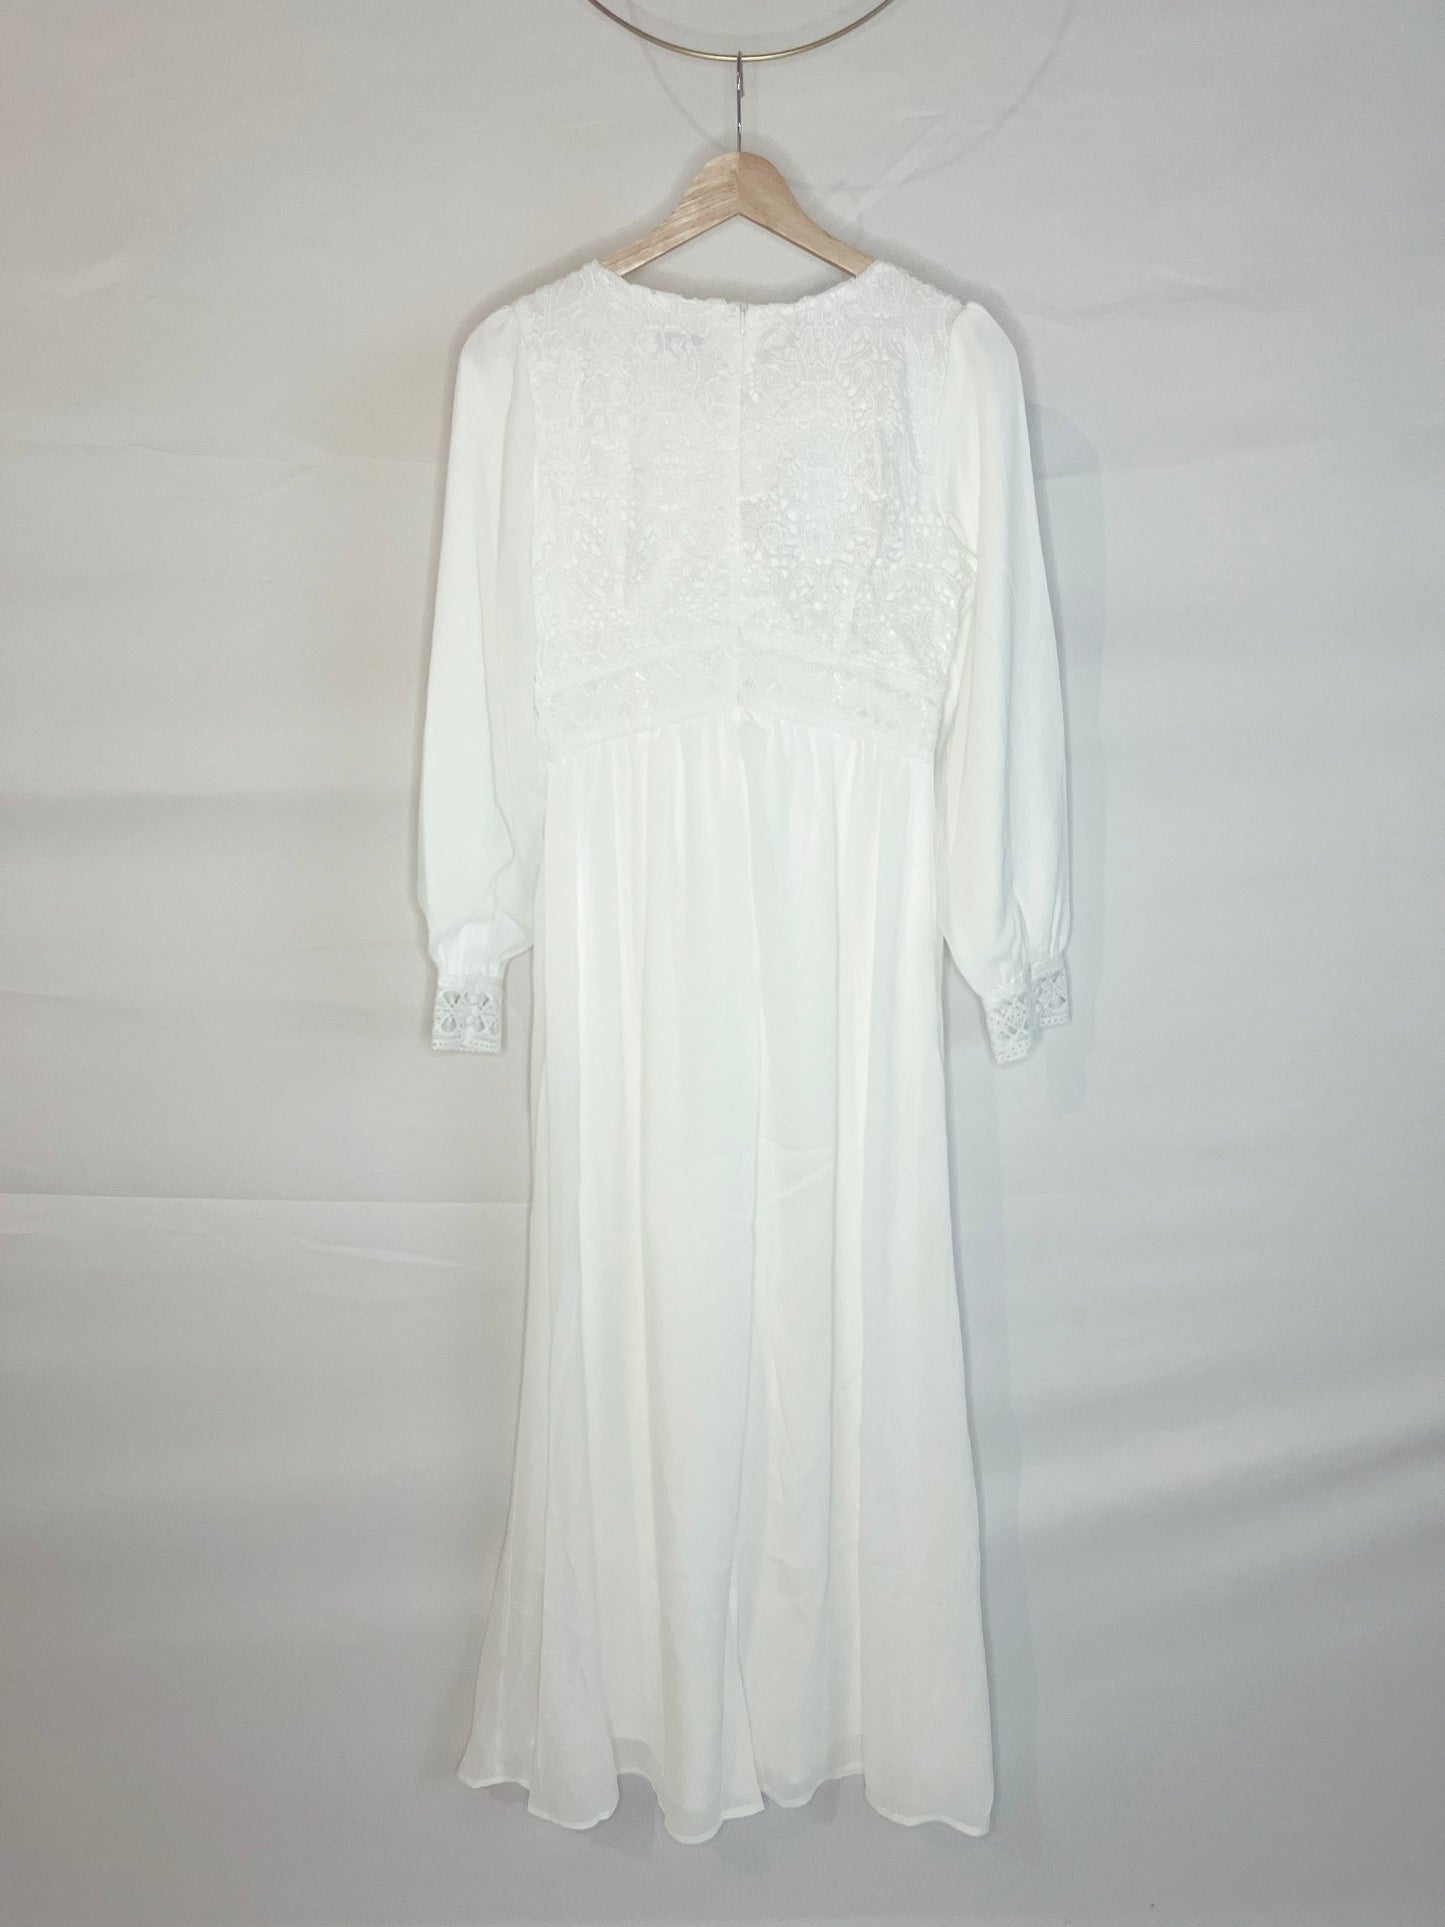 Lace Top & Cuff White Temple Dress